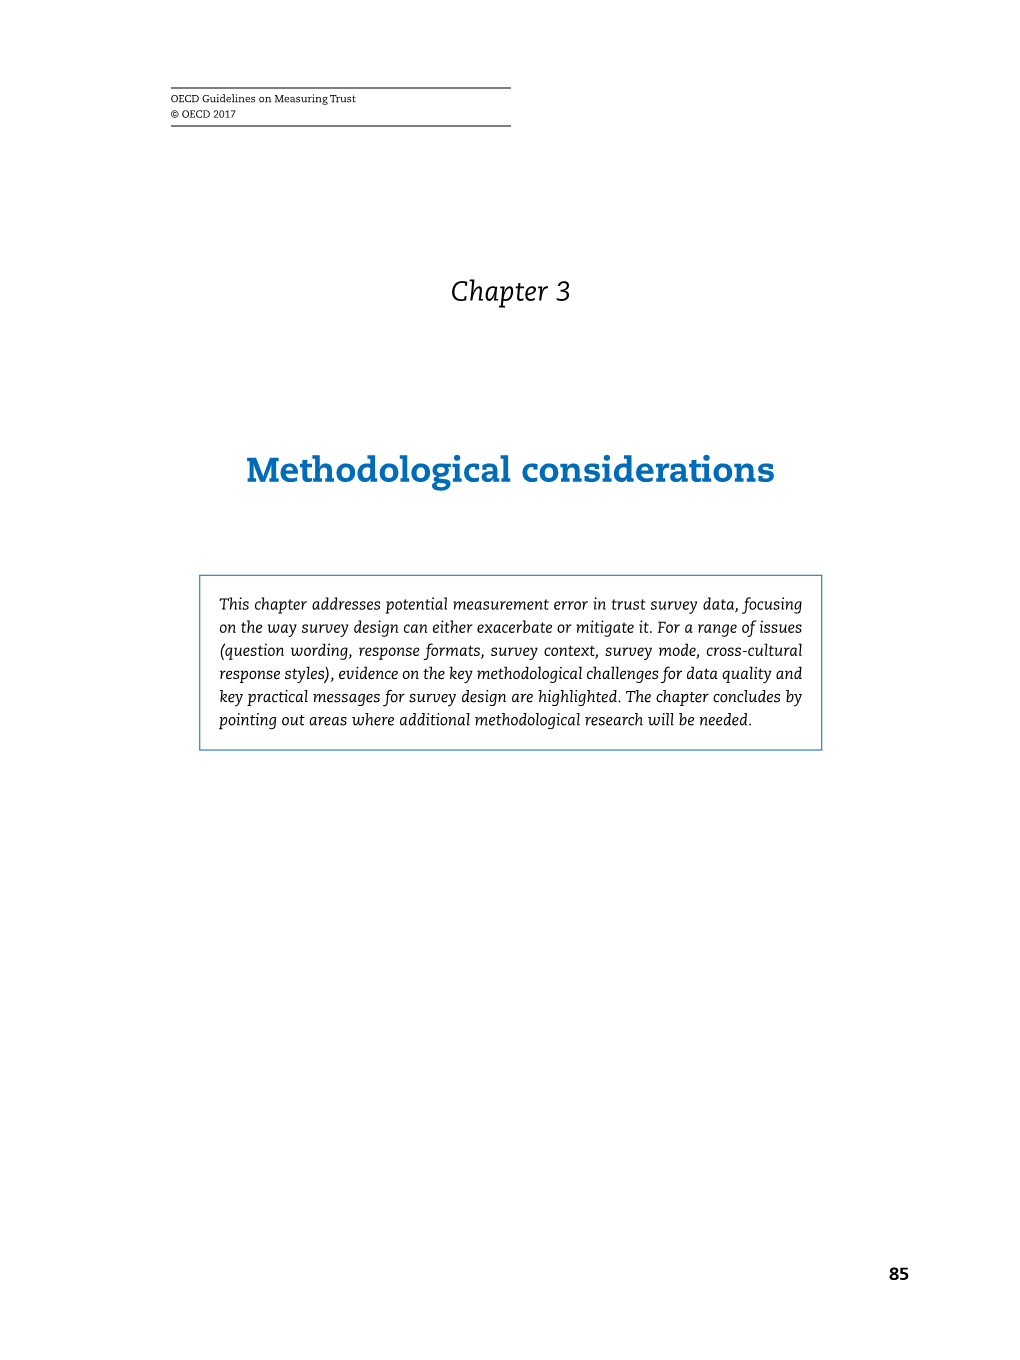 Methodological Considerations